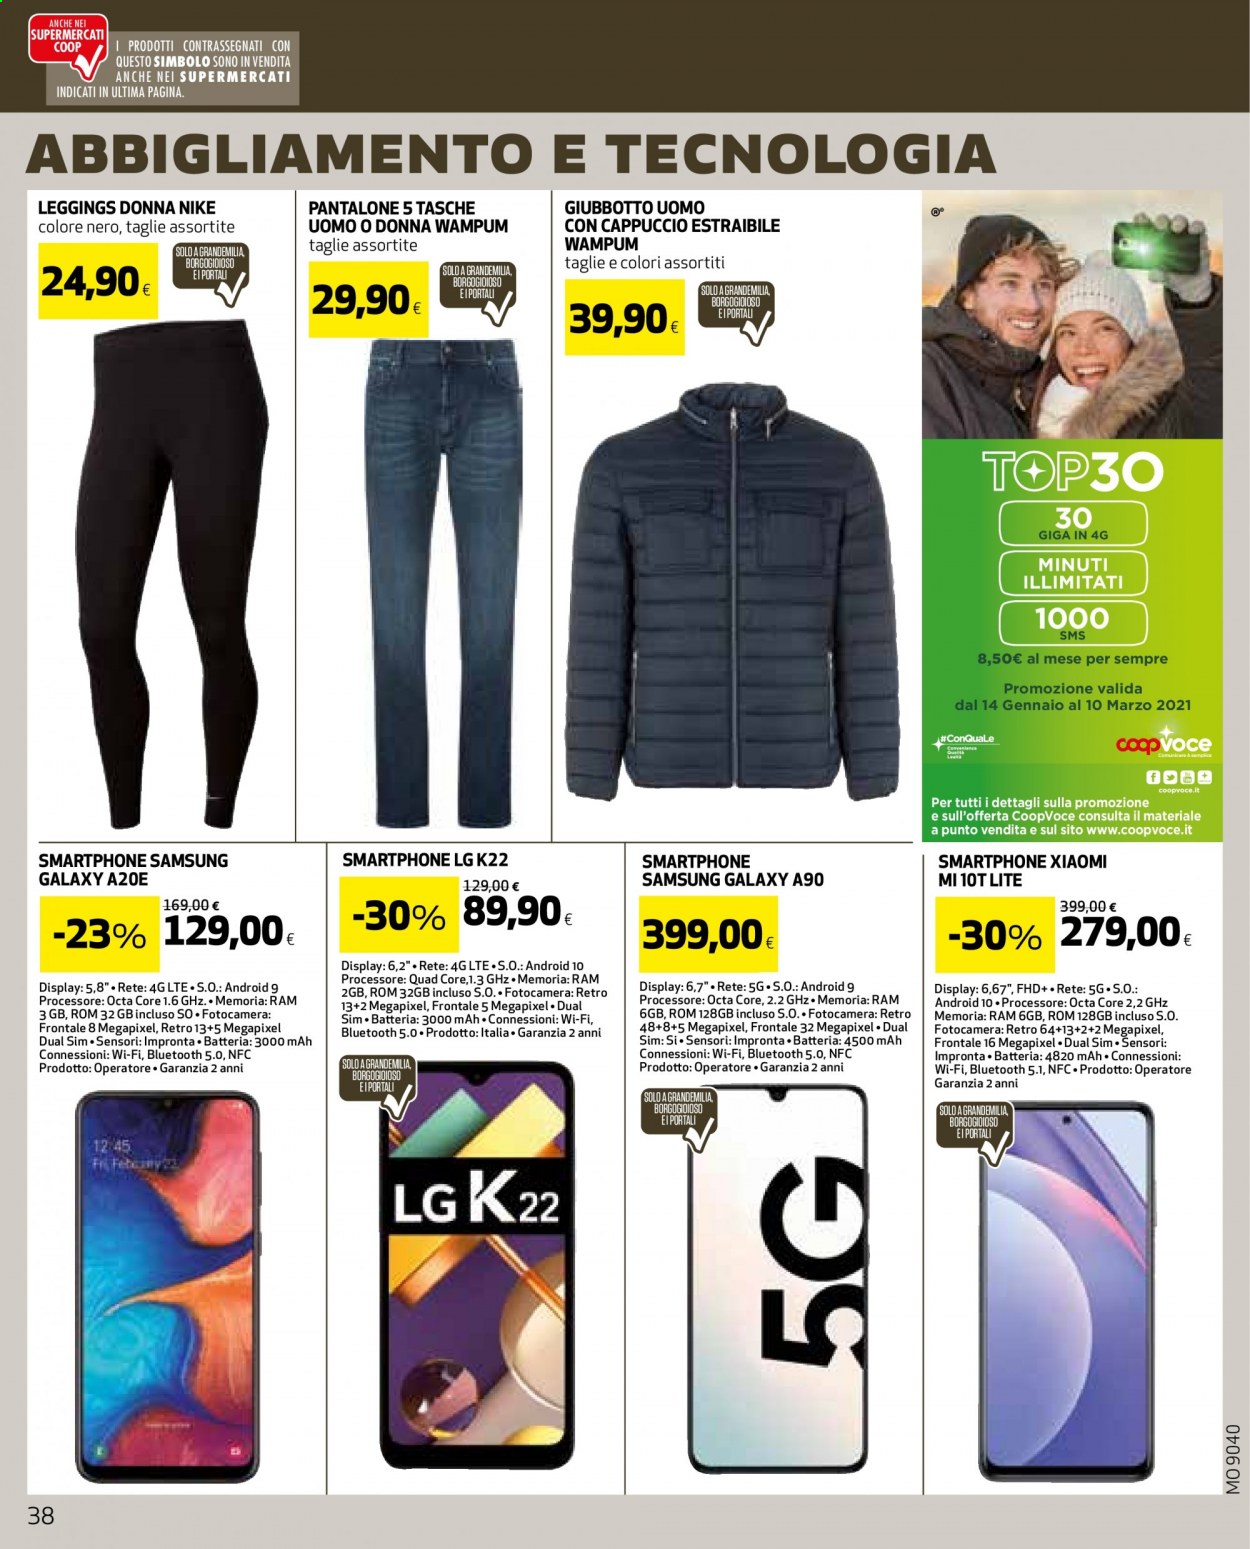 thumbnail - Volantino Coop - 25/2/2021 - 10/3/2021 - Prodotti in offerta - Nike, Samsung Galaxy, LG, Samsung, smartphone, pantalone, leggings. Pagina 38.